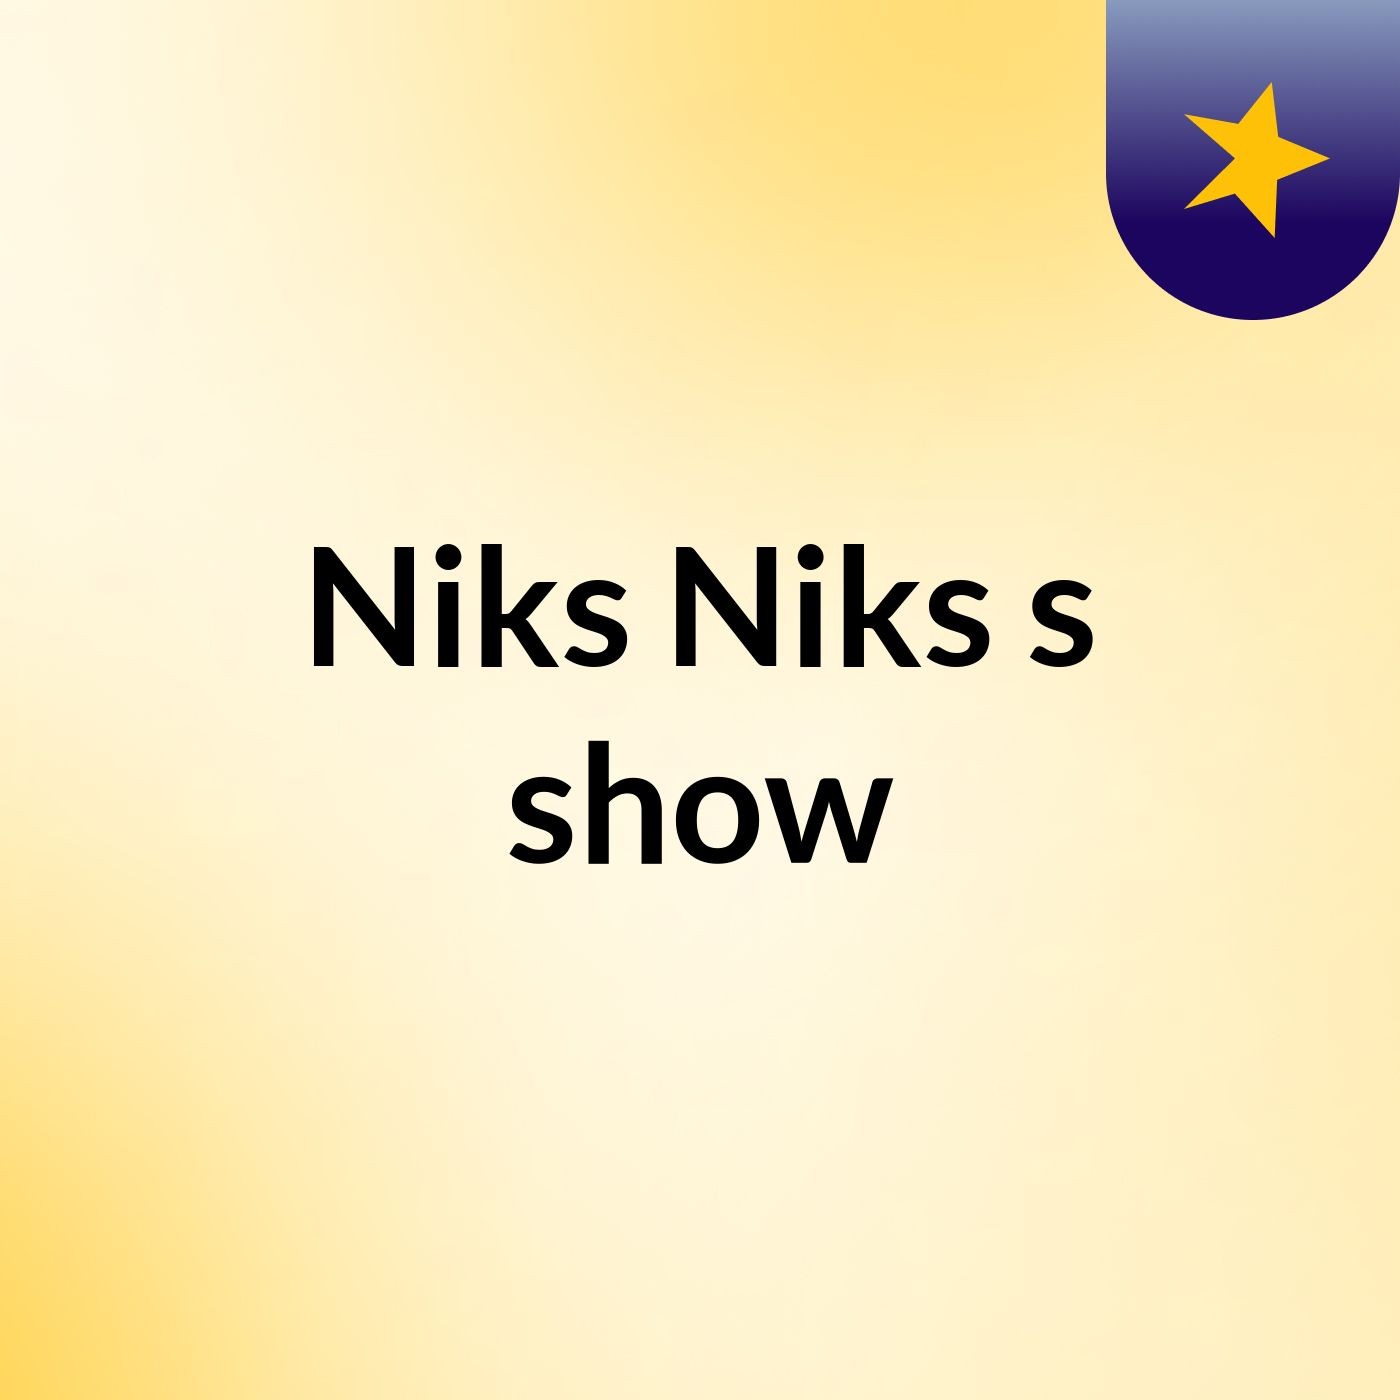 Niks Niks's show